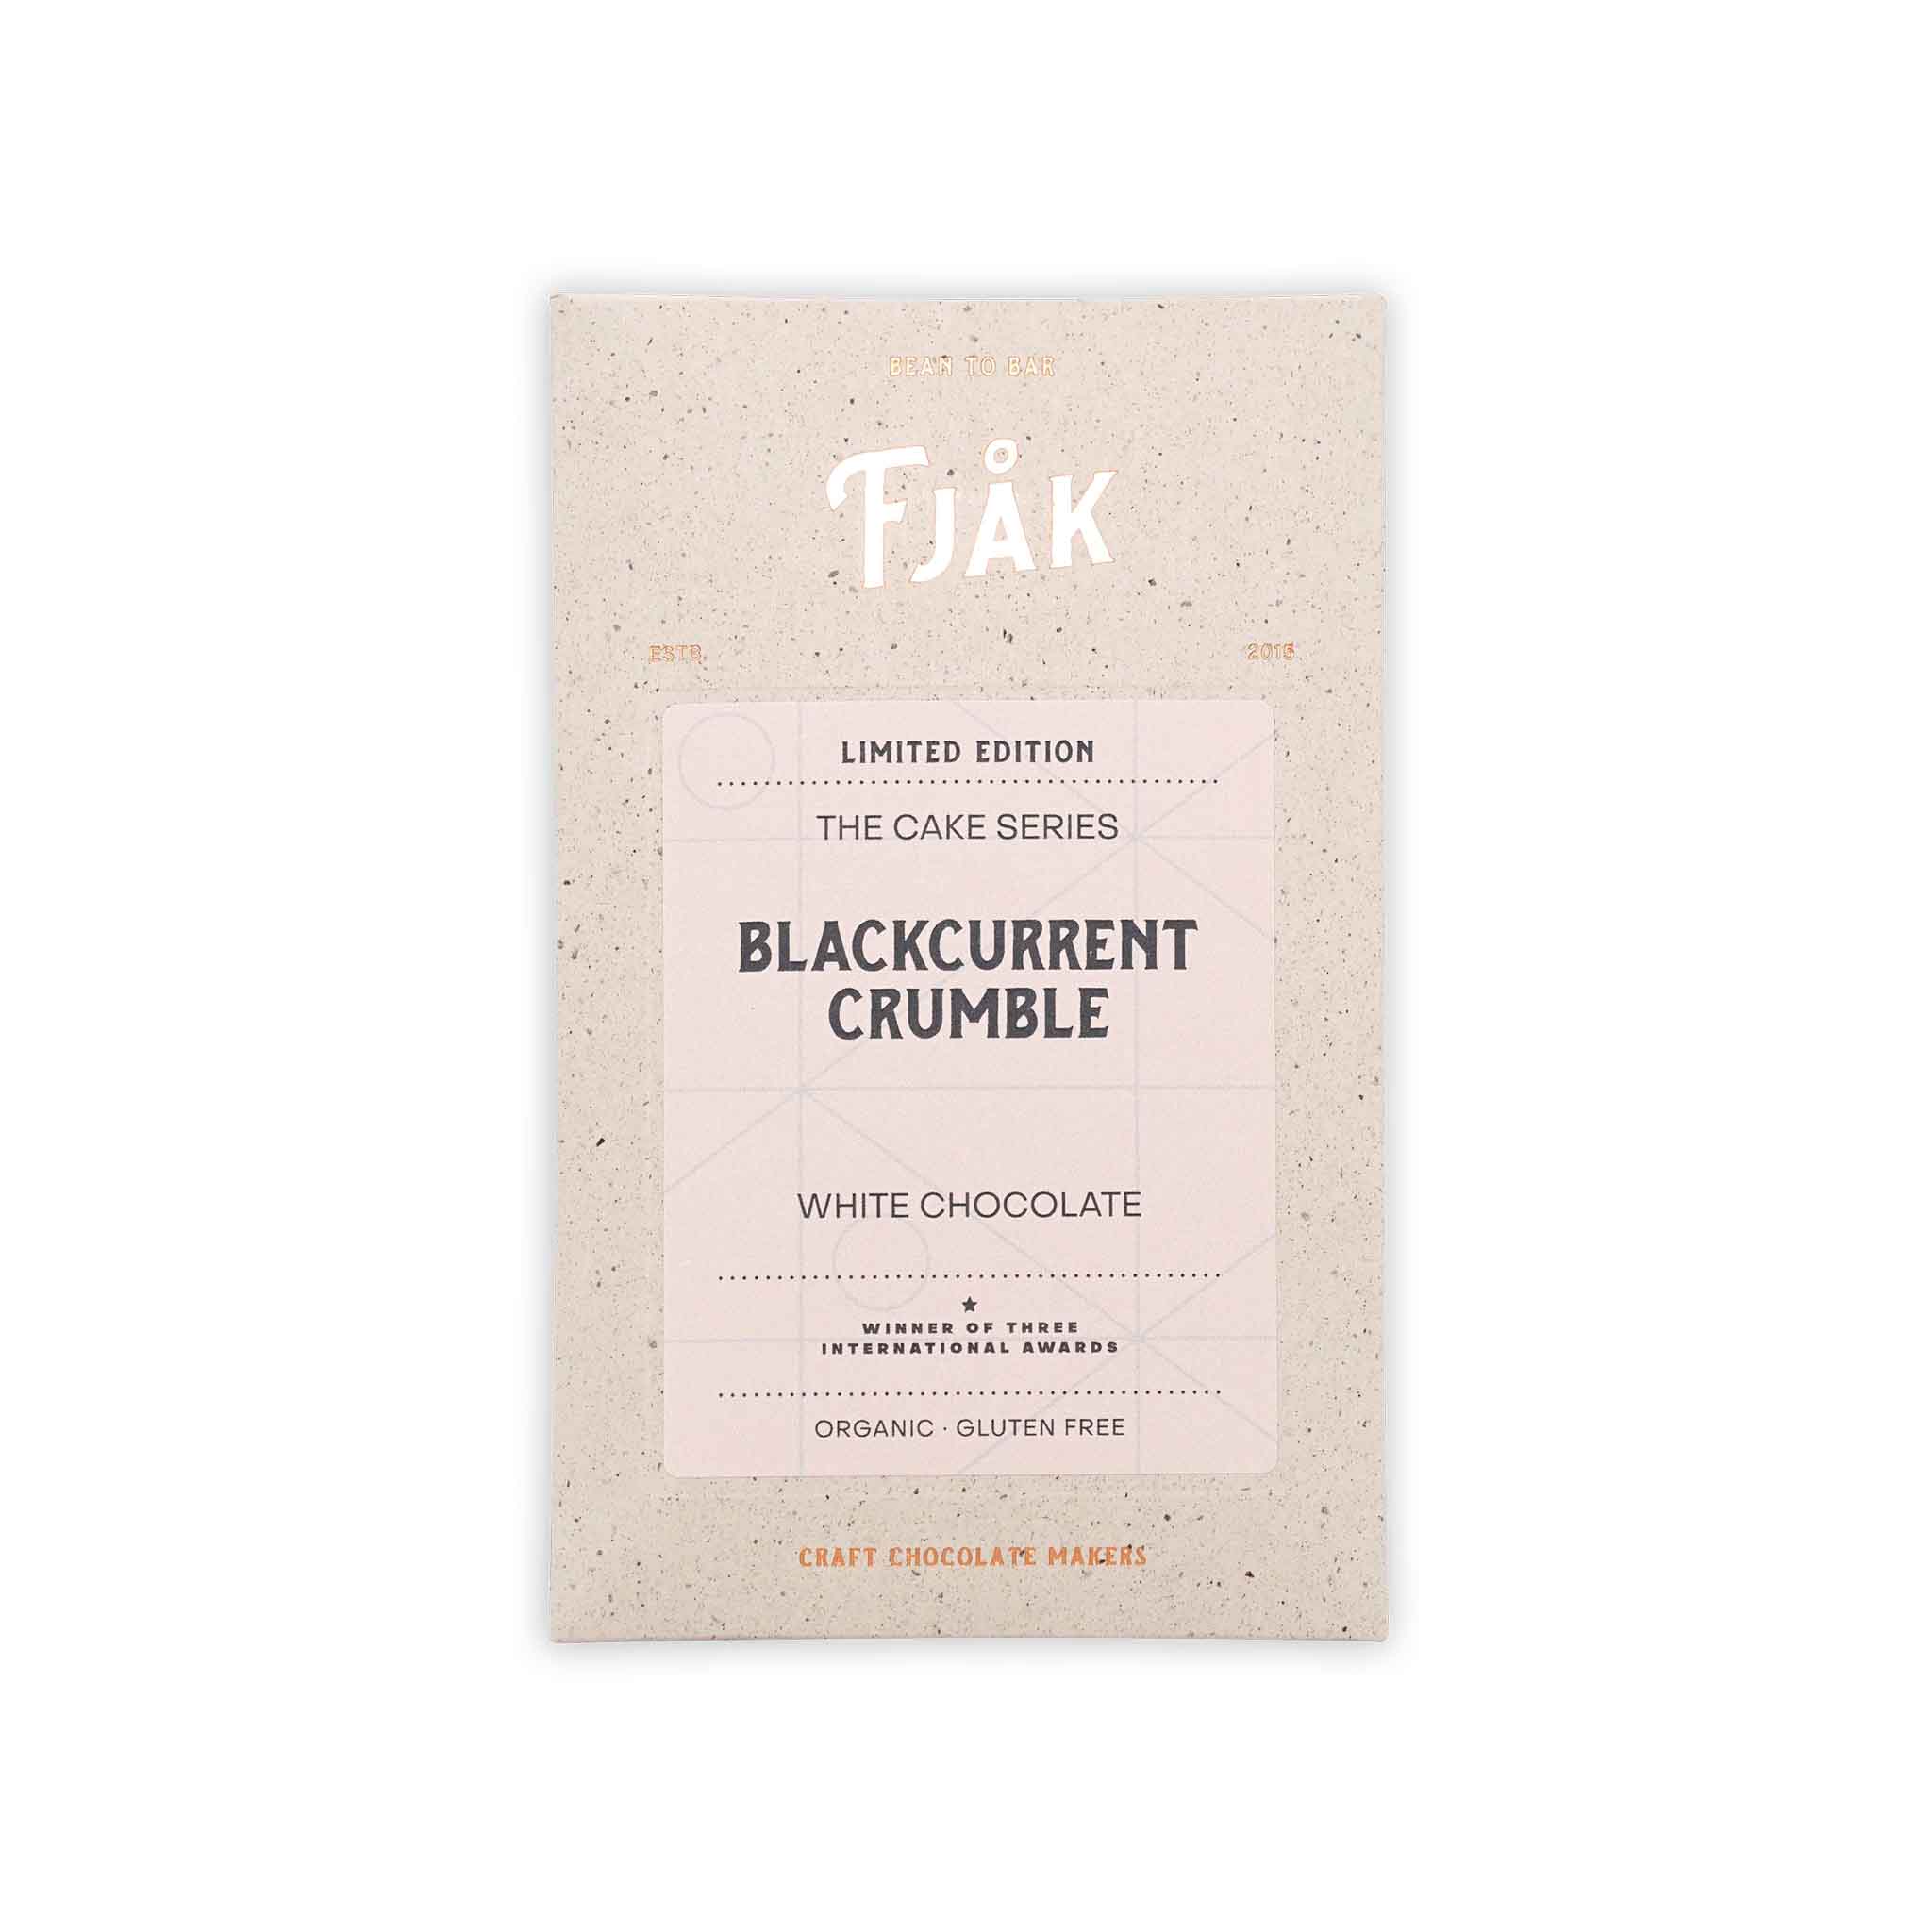 FJAK BLACKCURRANT CRUMBLE WHITE CHOCOLATE 60g